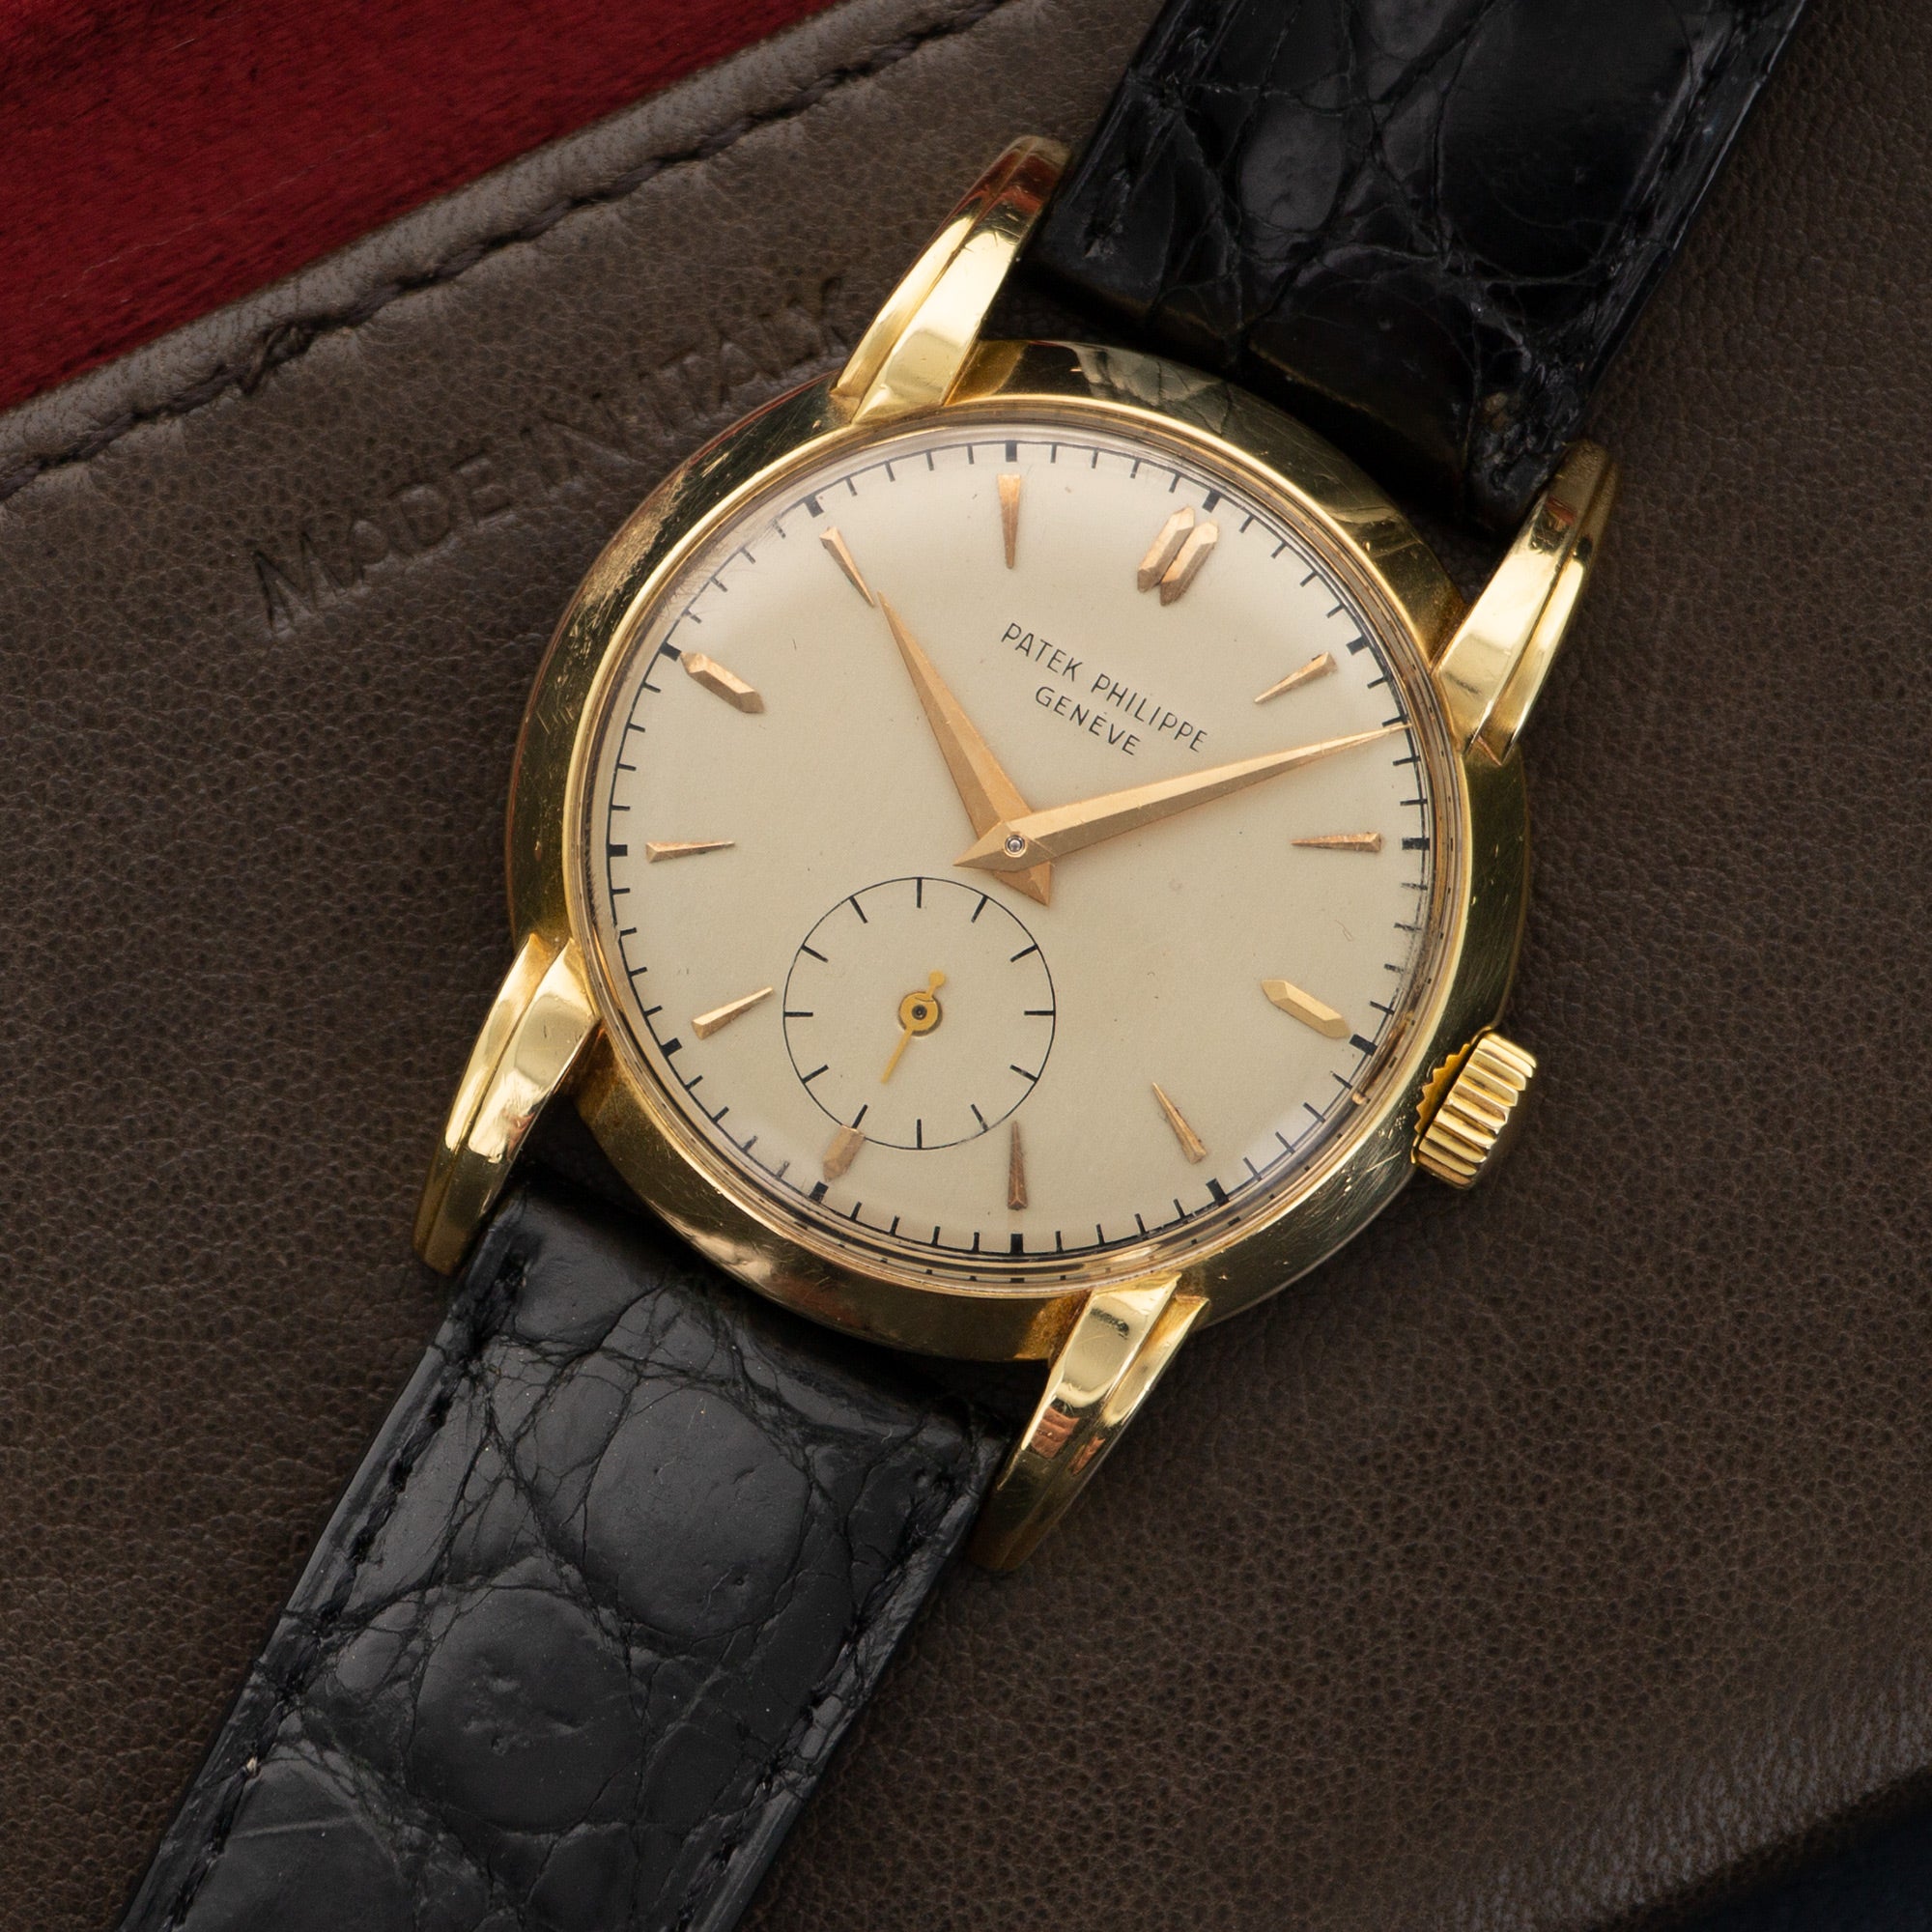 Patek Philippe - Patek Philippe Yellow Gold Unusual Lugs Watch Ref. 2429 - The Keystone Watches